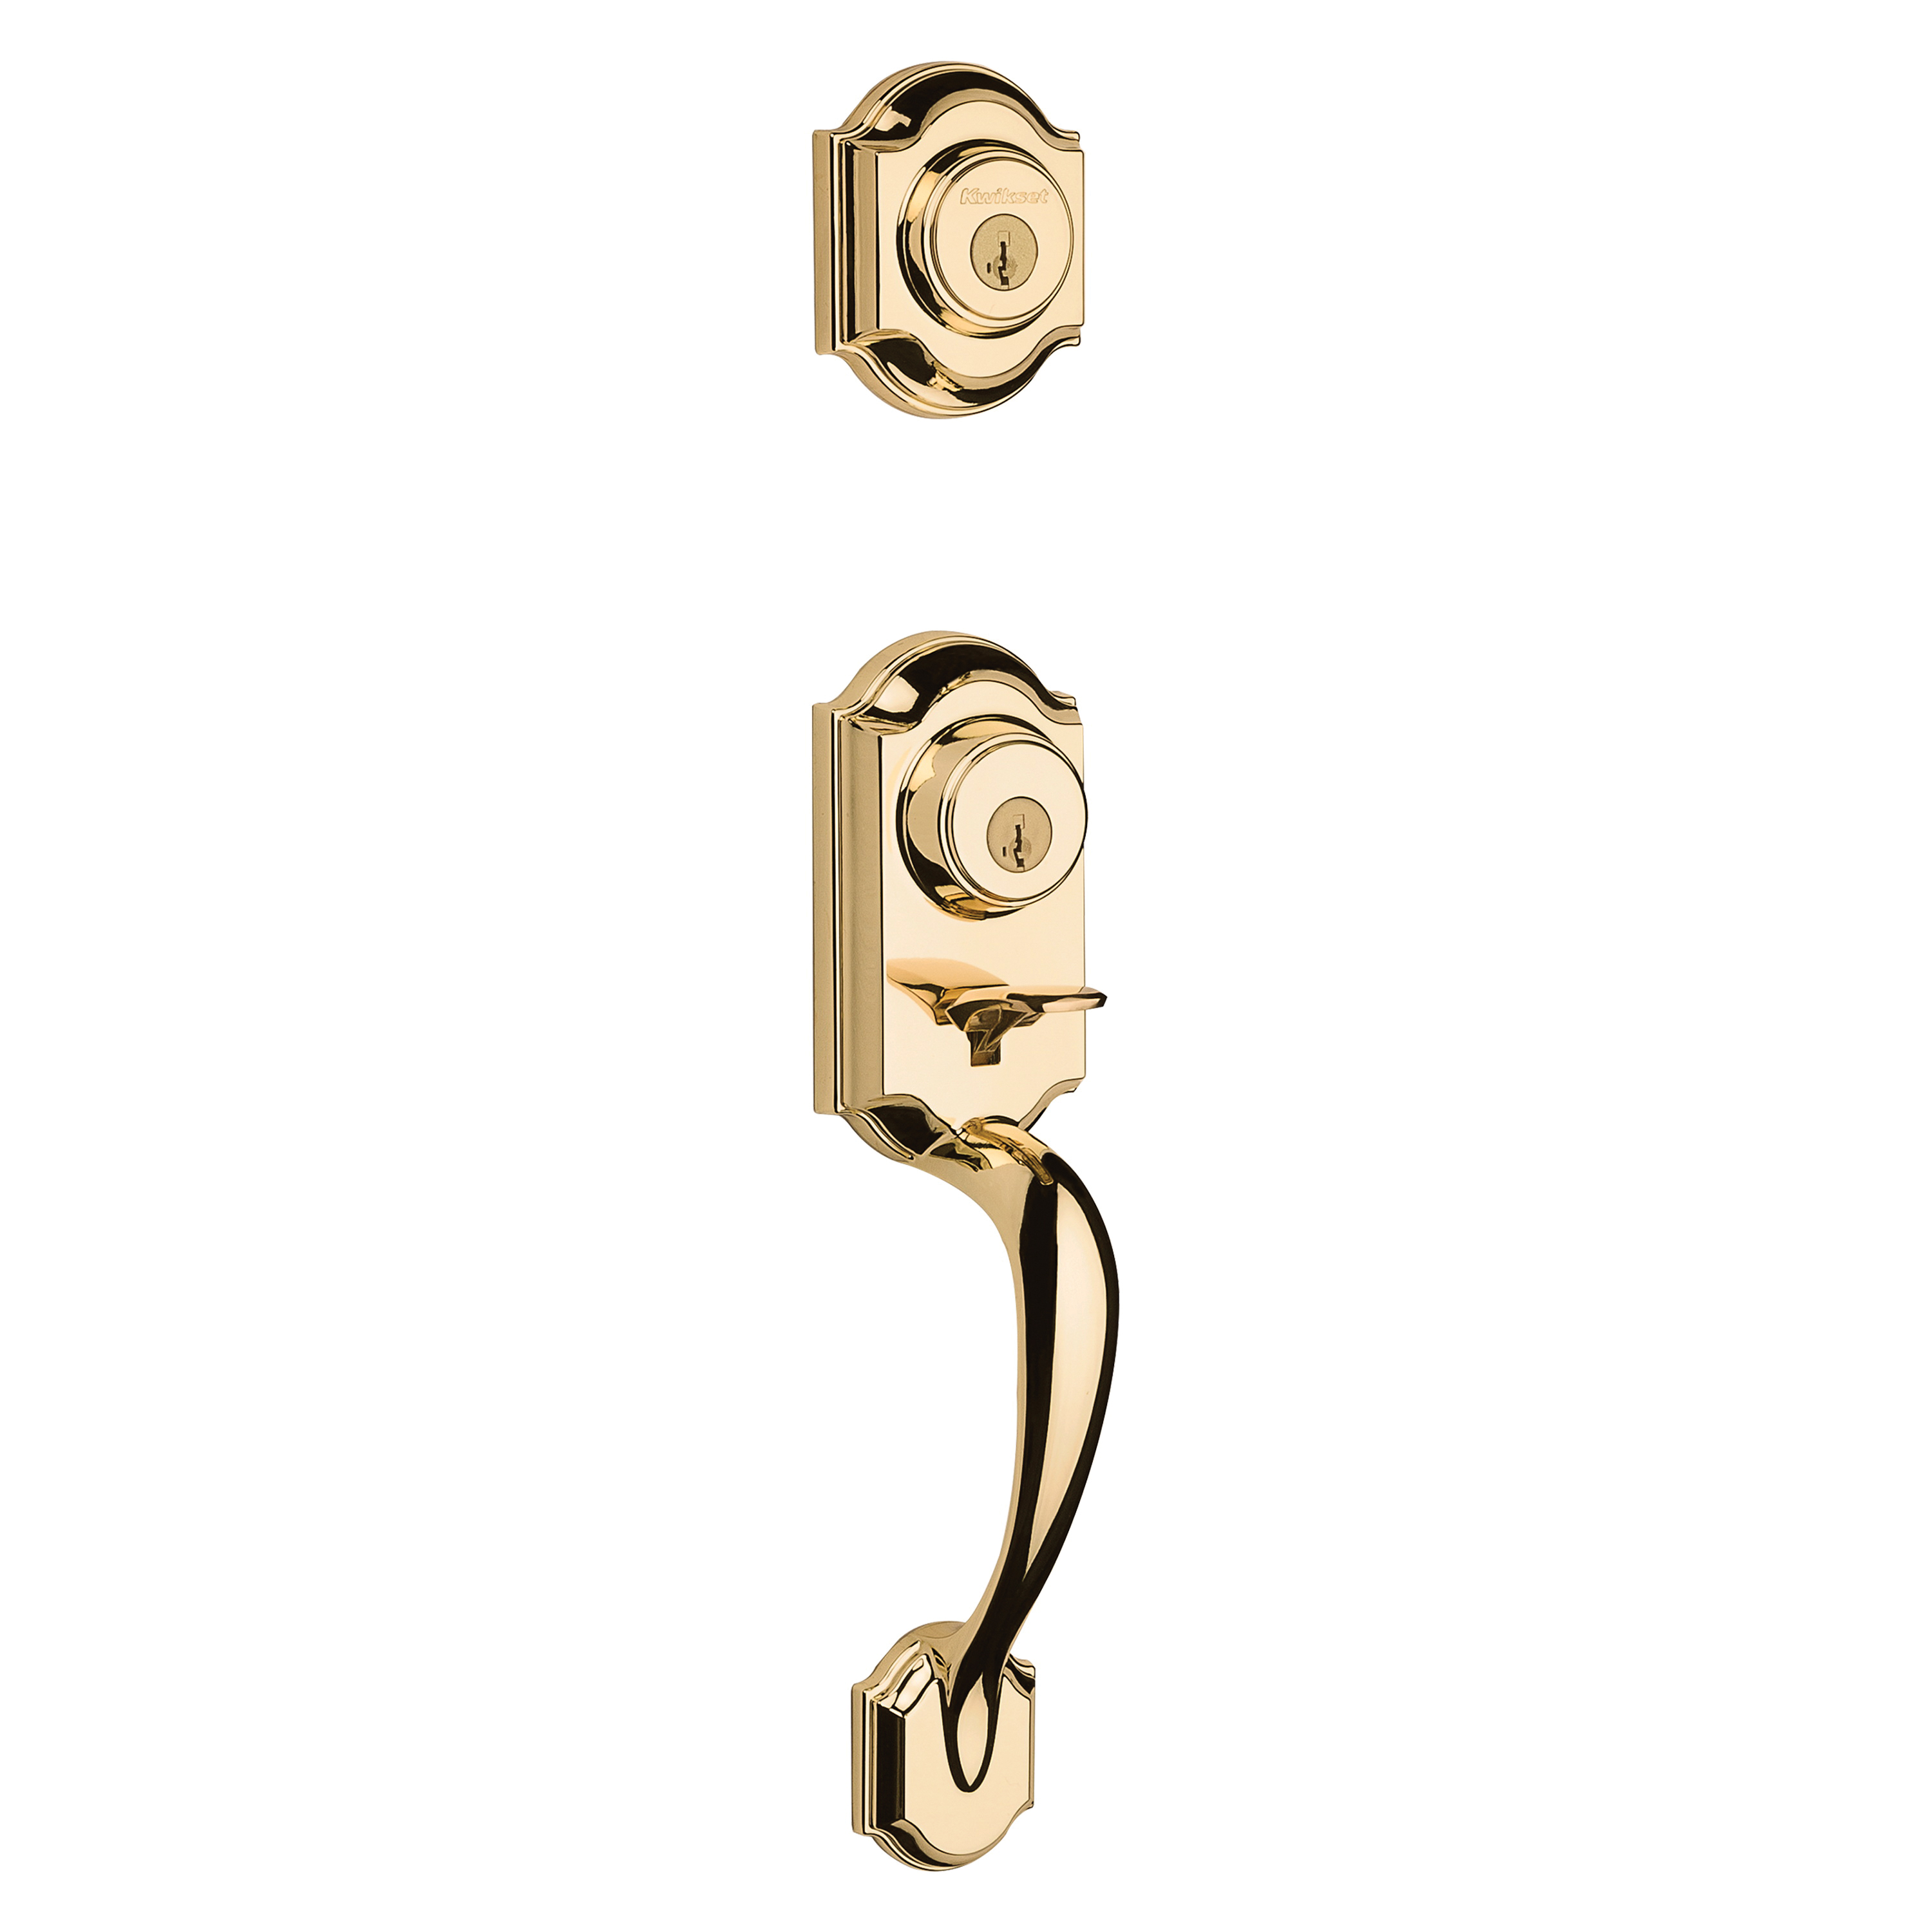 95530-017 Combination Lockset, Polished Brass, Knob Interior Handle, 2 Grade, Re-Key Technology: SmartKey